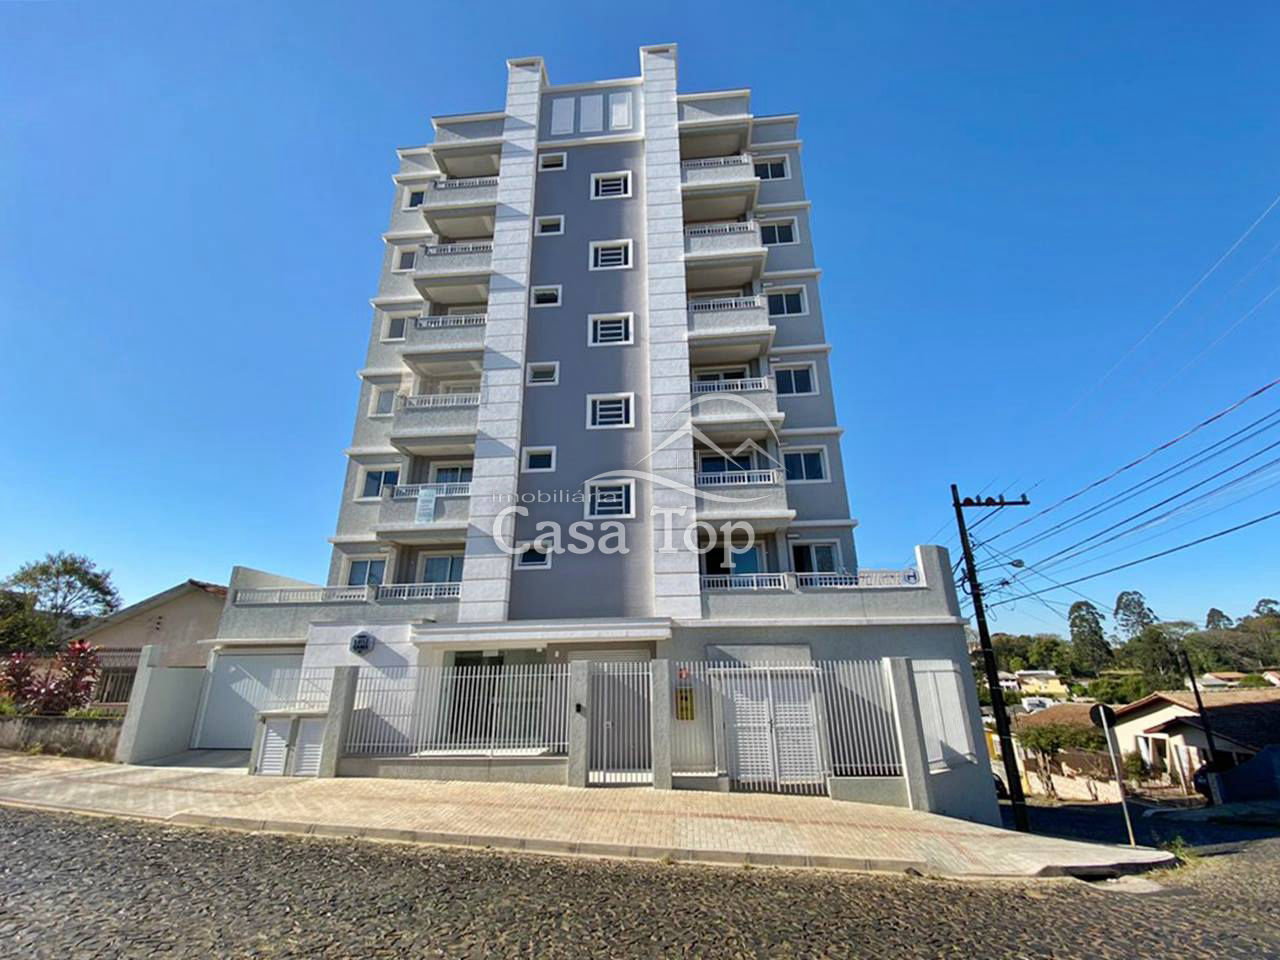 Cobertura Duplex à venda Oficinas - Edifício Luiz Gama